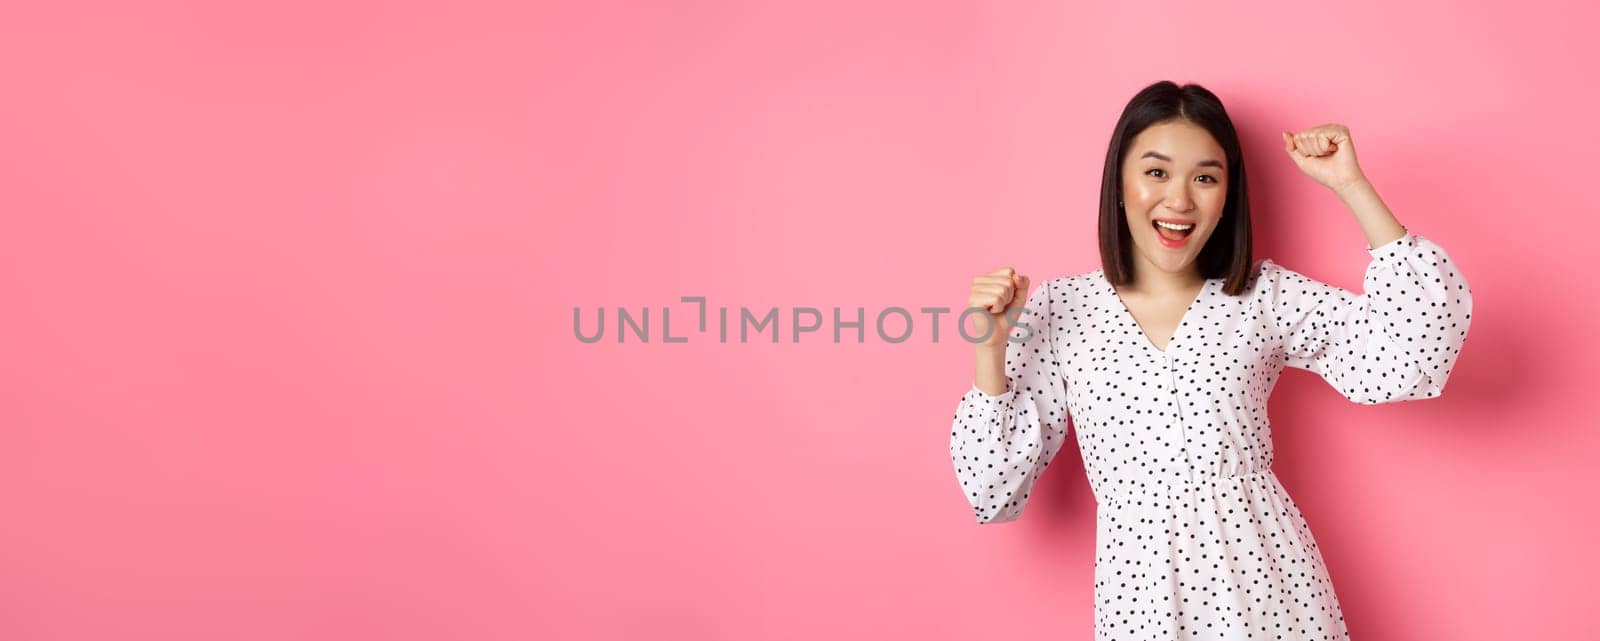 Beautiful korean woman dancing and having fun, smiling happy at camera, posing against pink background by Benzoix